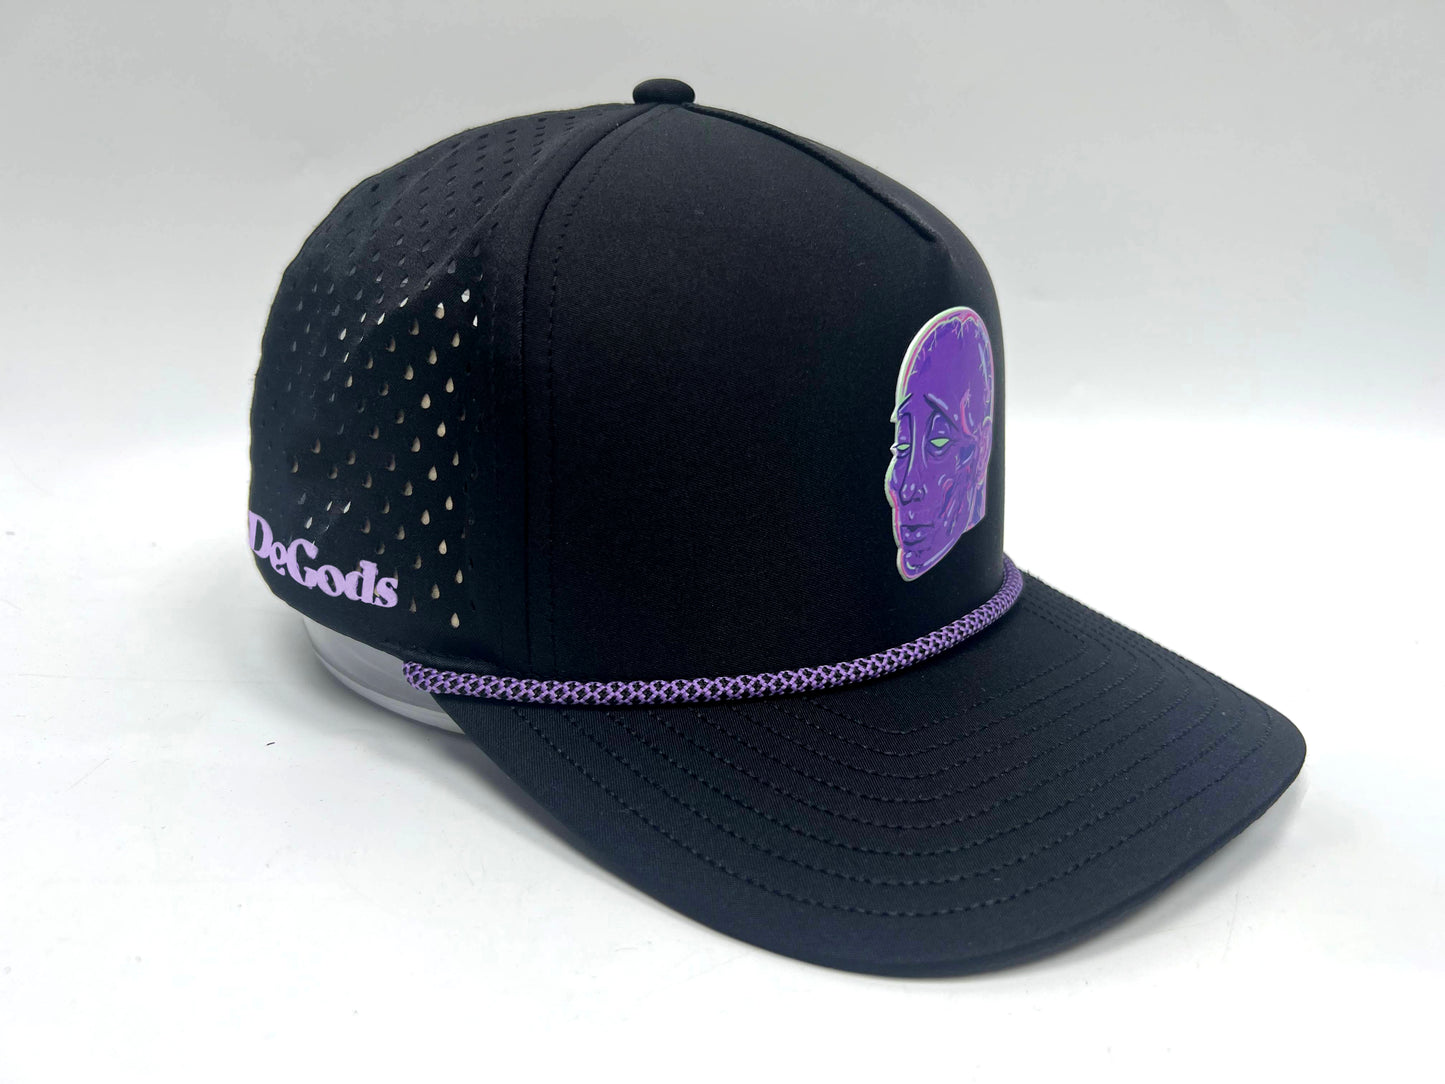 DeGods NEBULA Premium Black Trucker Hat - Special Edition